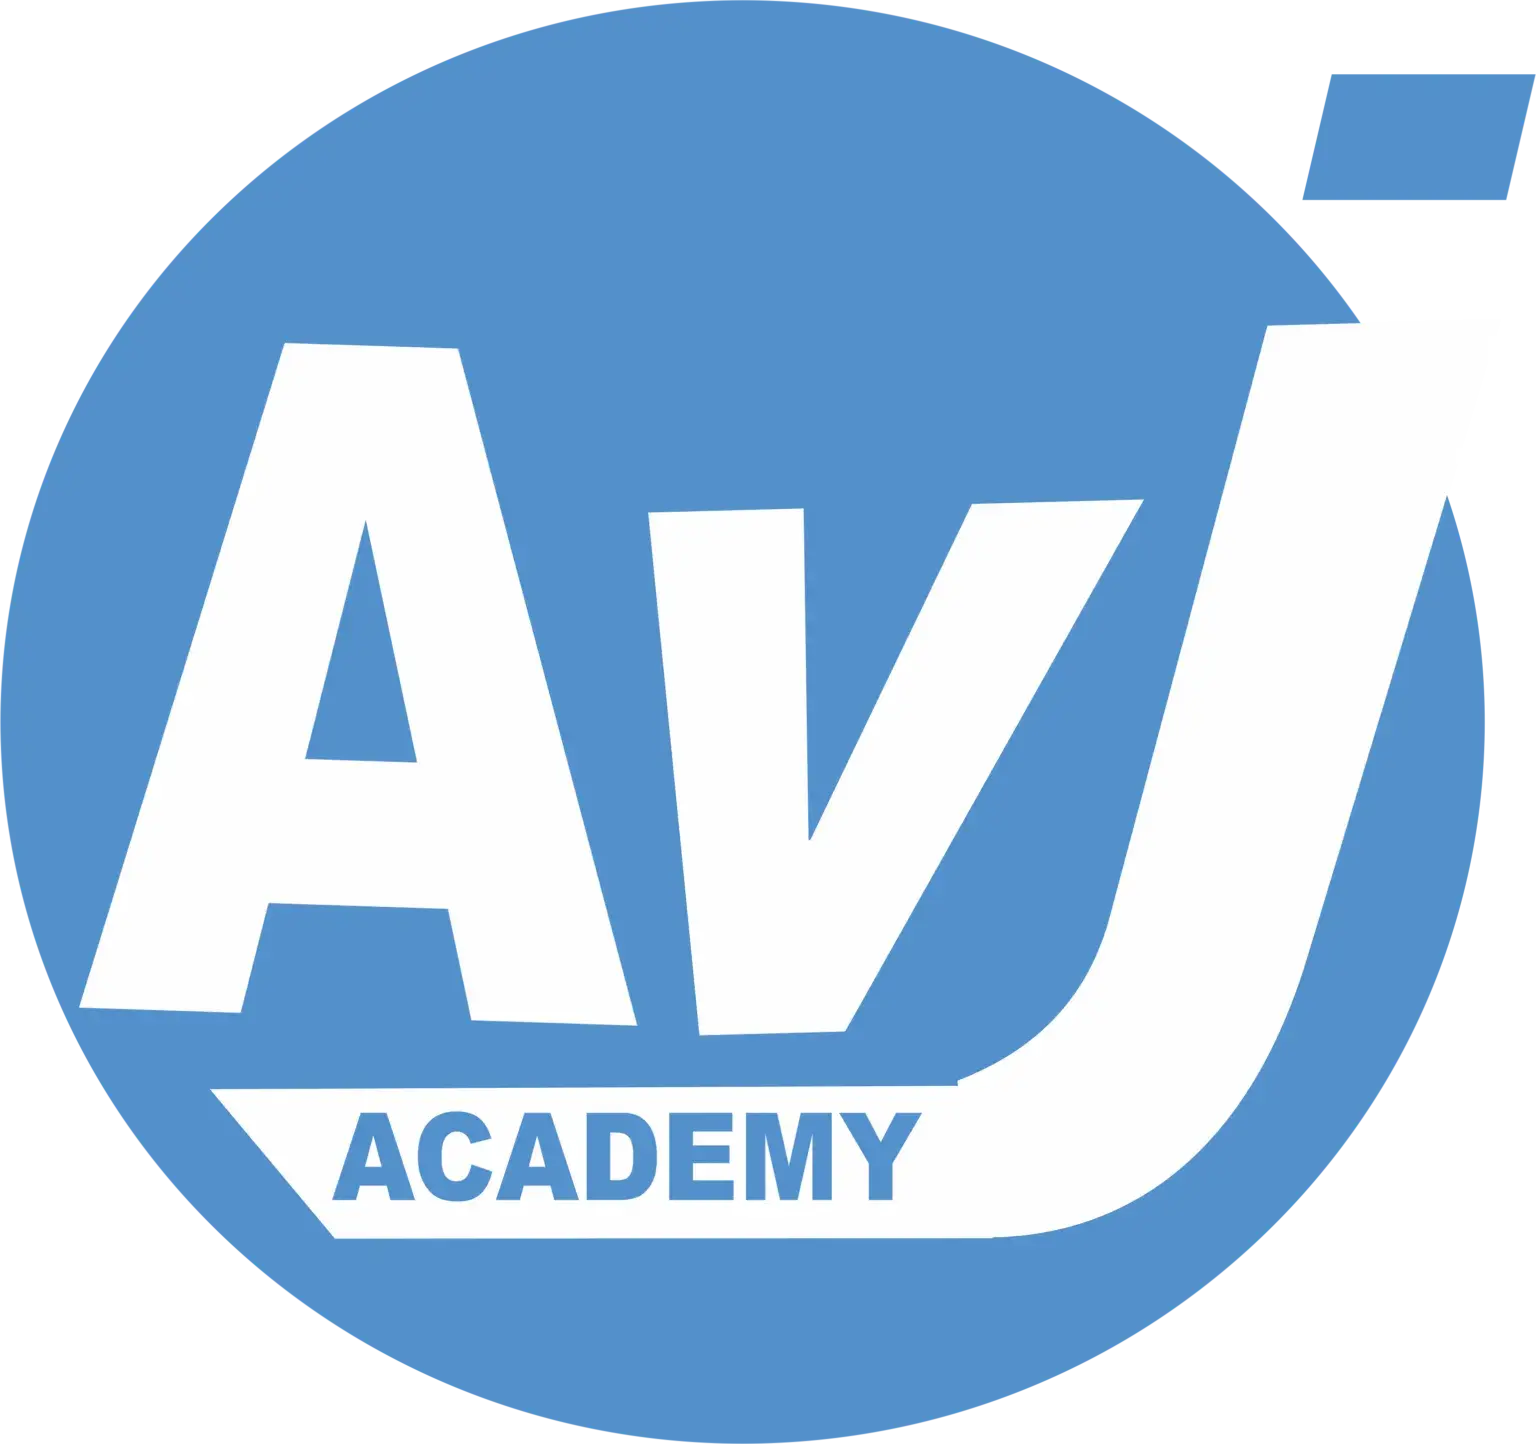 AVJ Academy